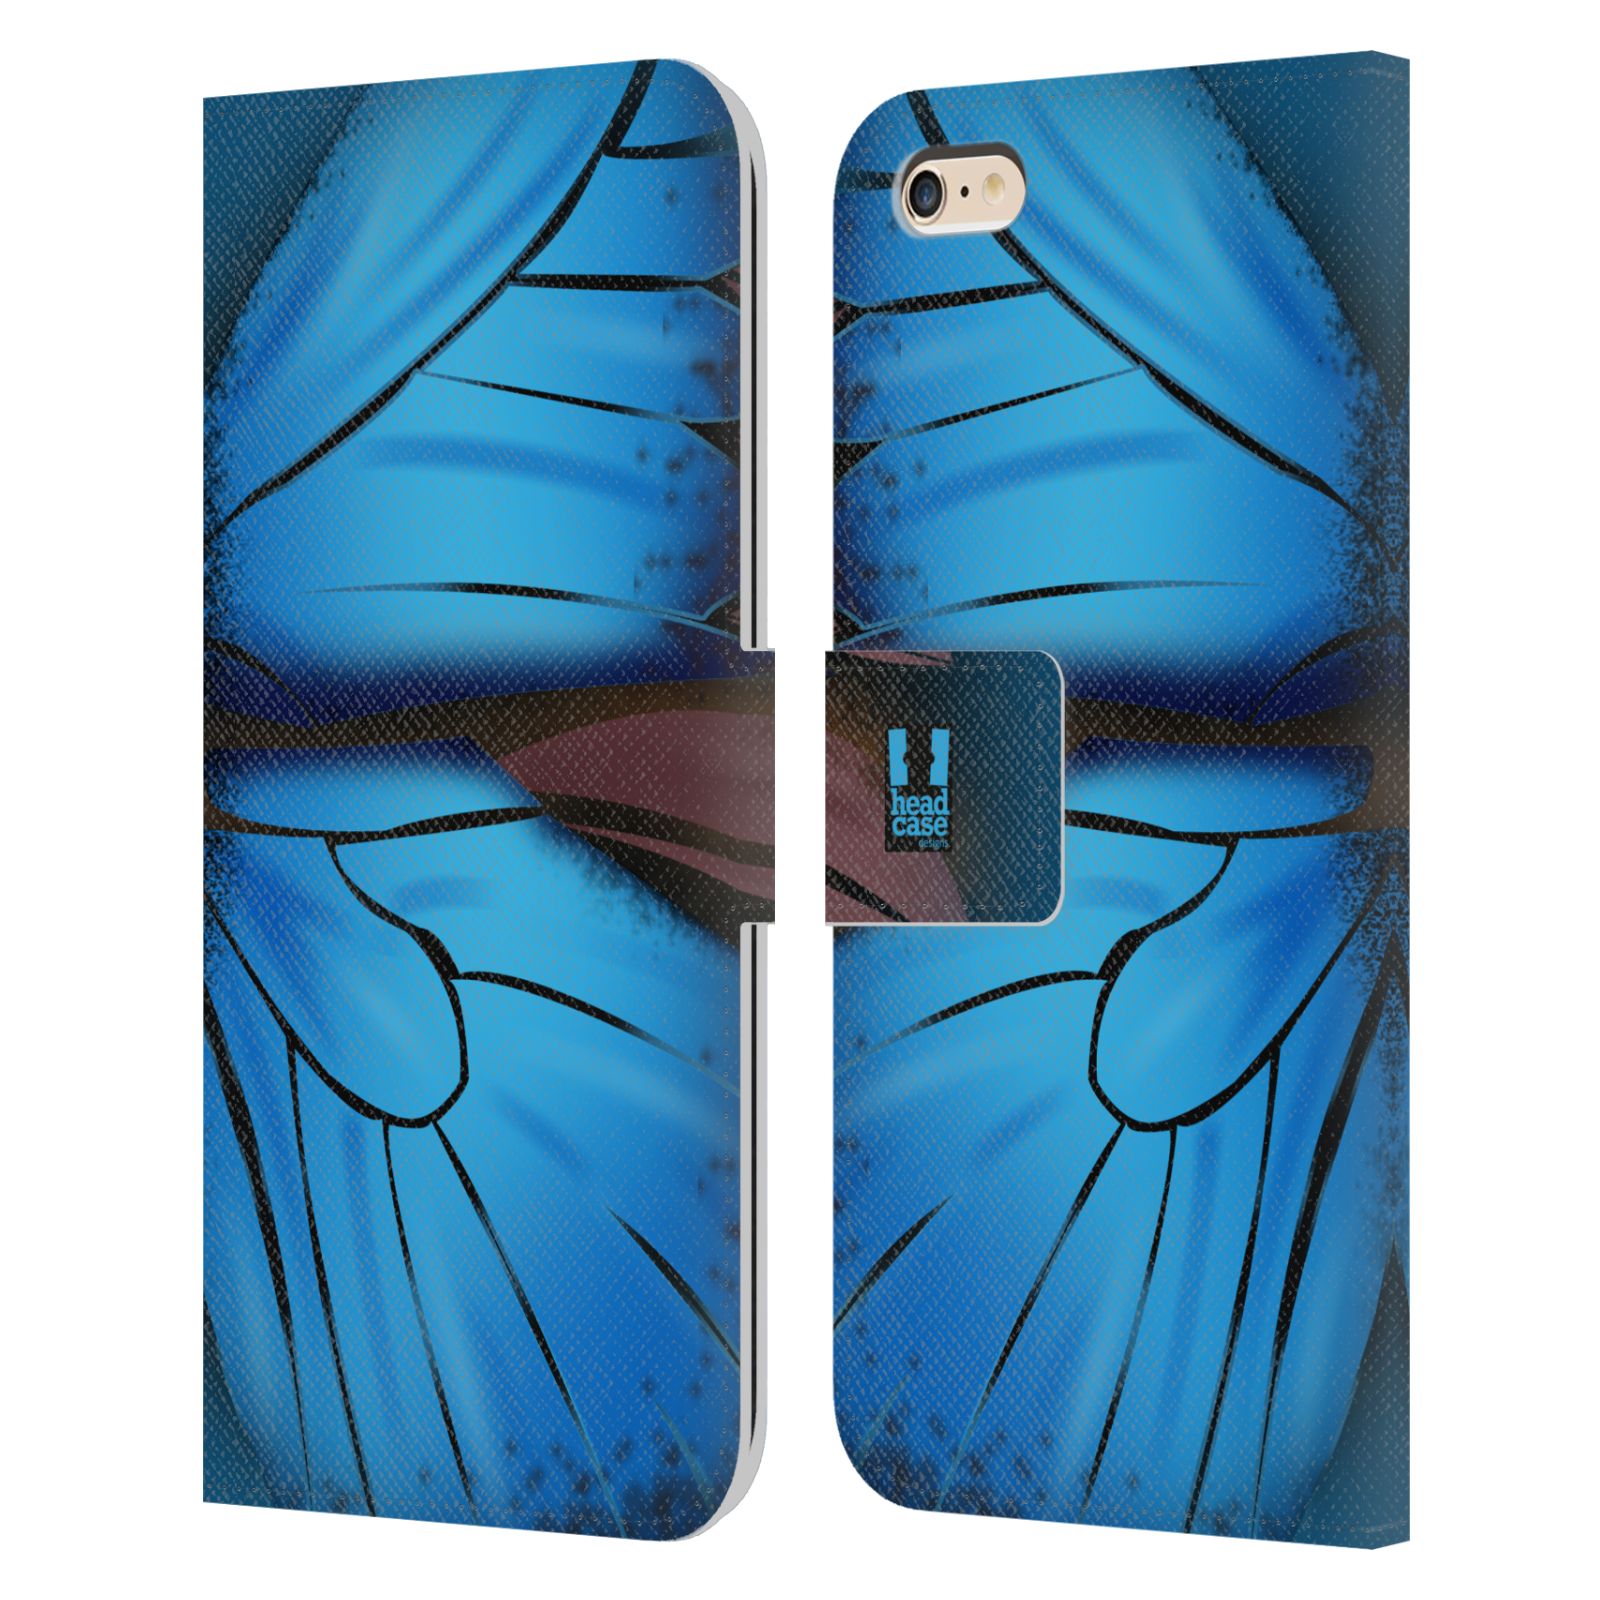 HEAD CASE Flipové pouzdro pro mobil Apple Iphone 6 PLUS / 6S PLUS motýl a křídla kreslený vzor modrá barva